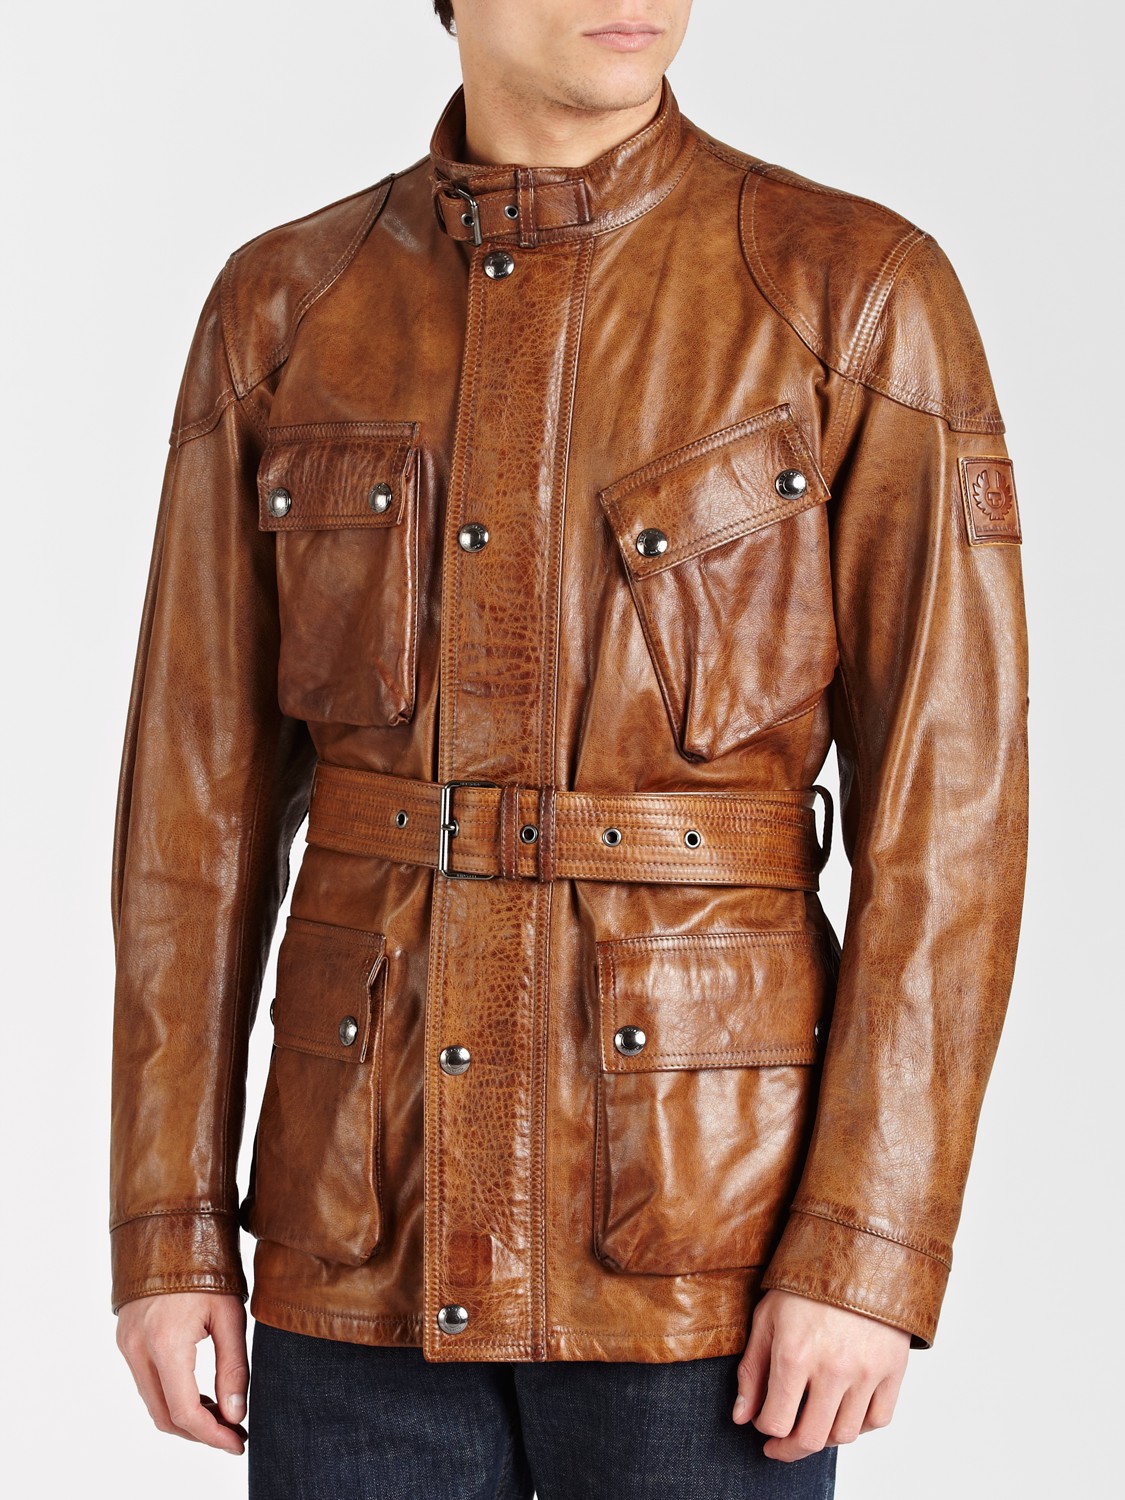 belstaff leather jacket panther biker brown cognac lyst clothing